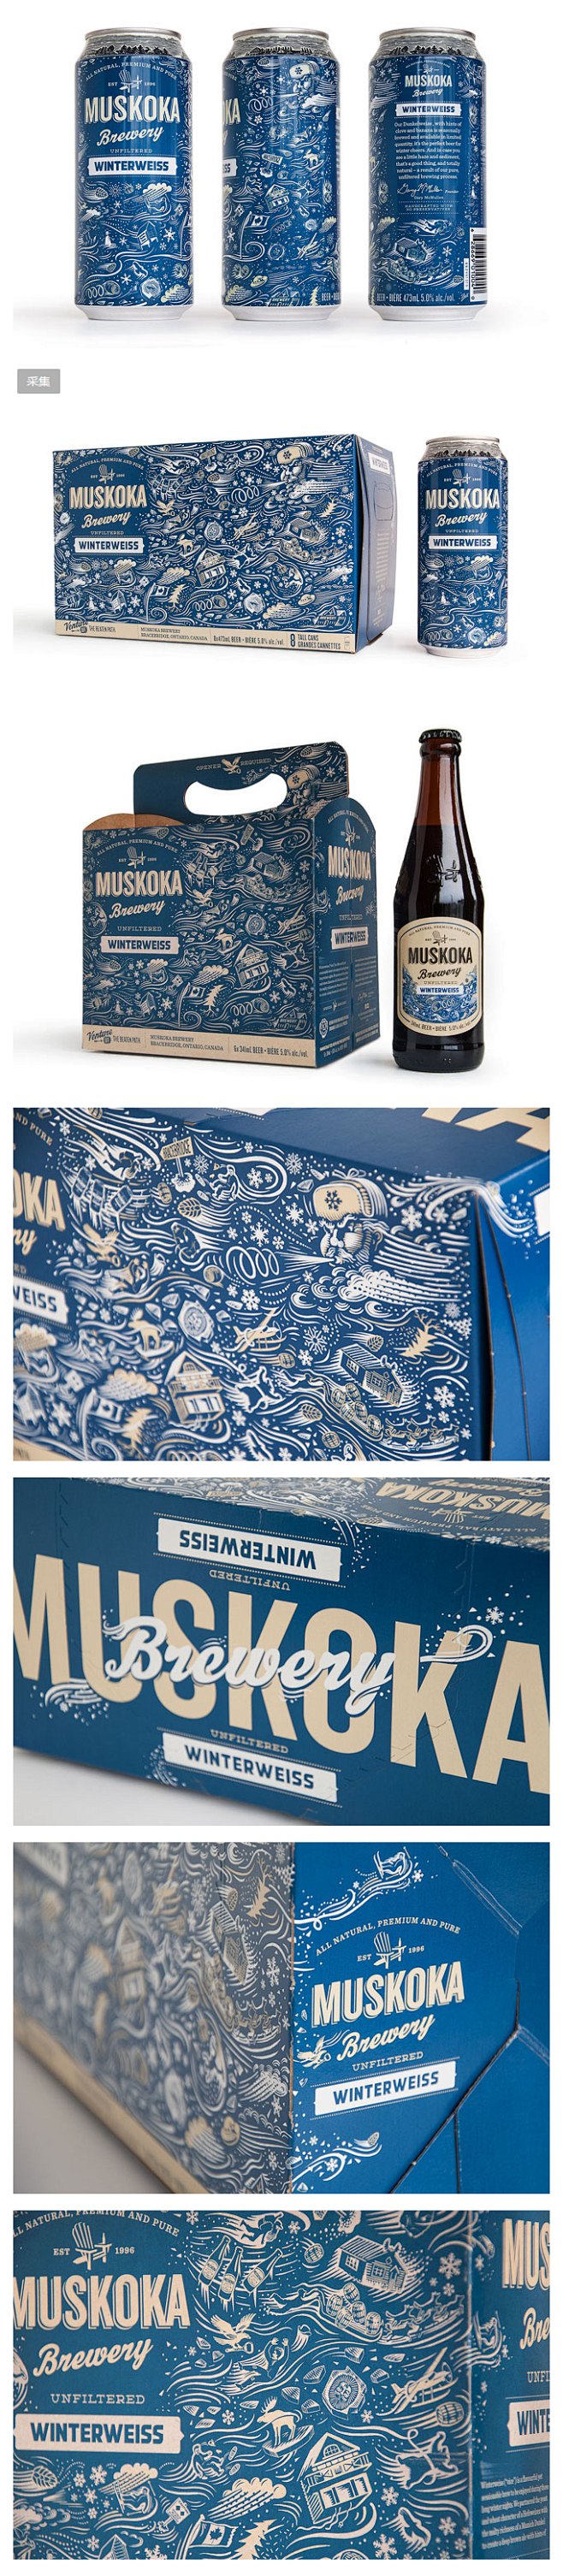 Muskoka啤酒冬季包装设计欣赏